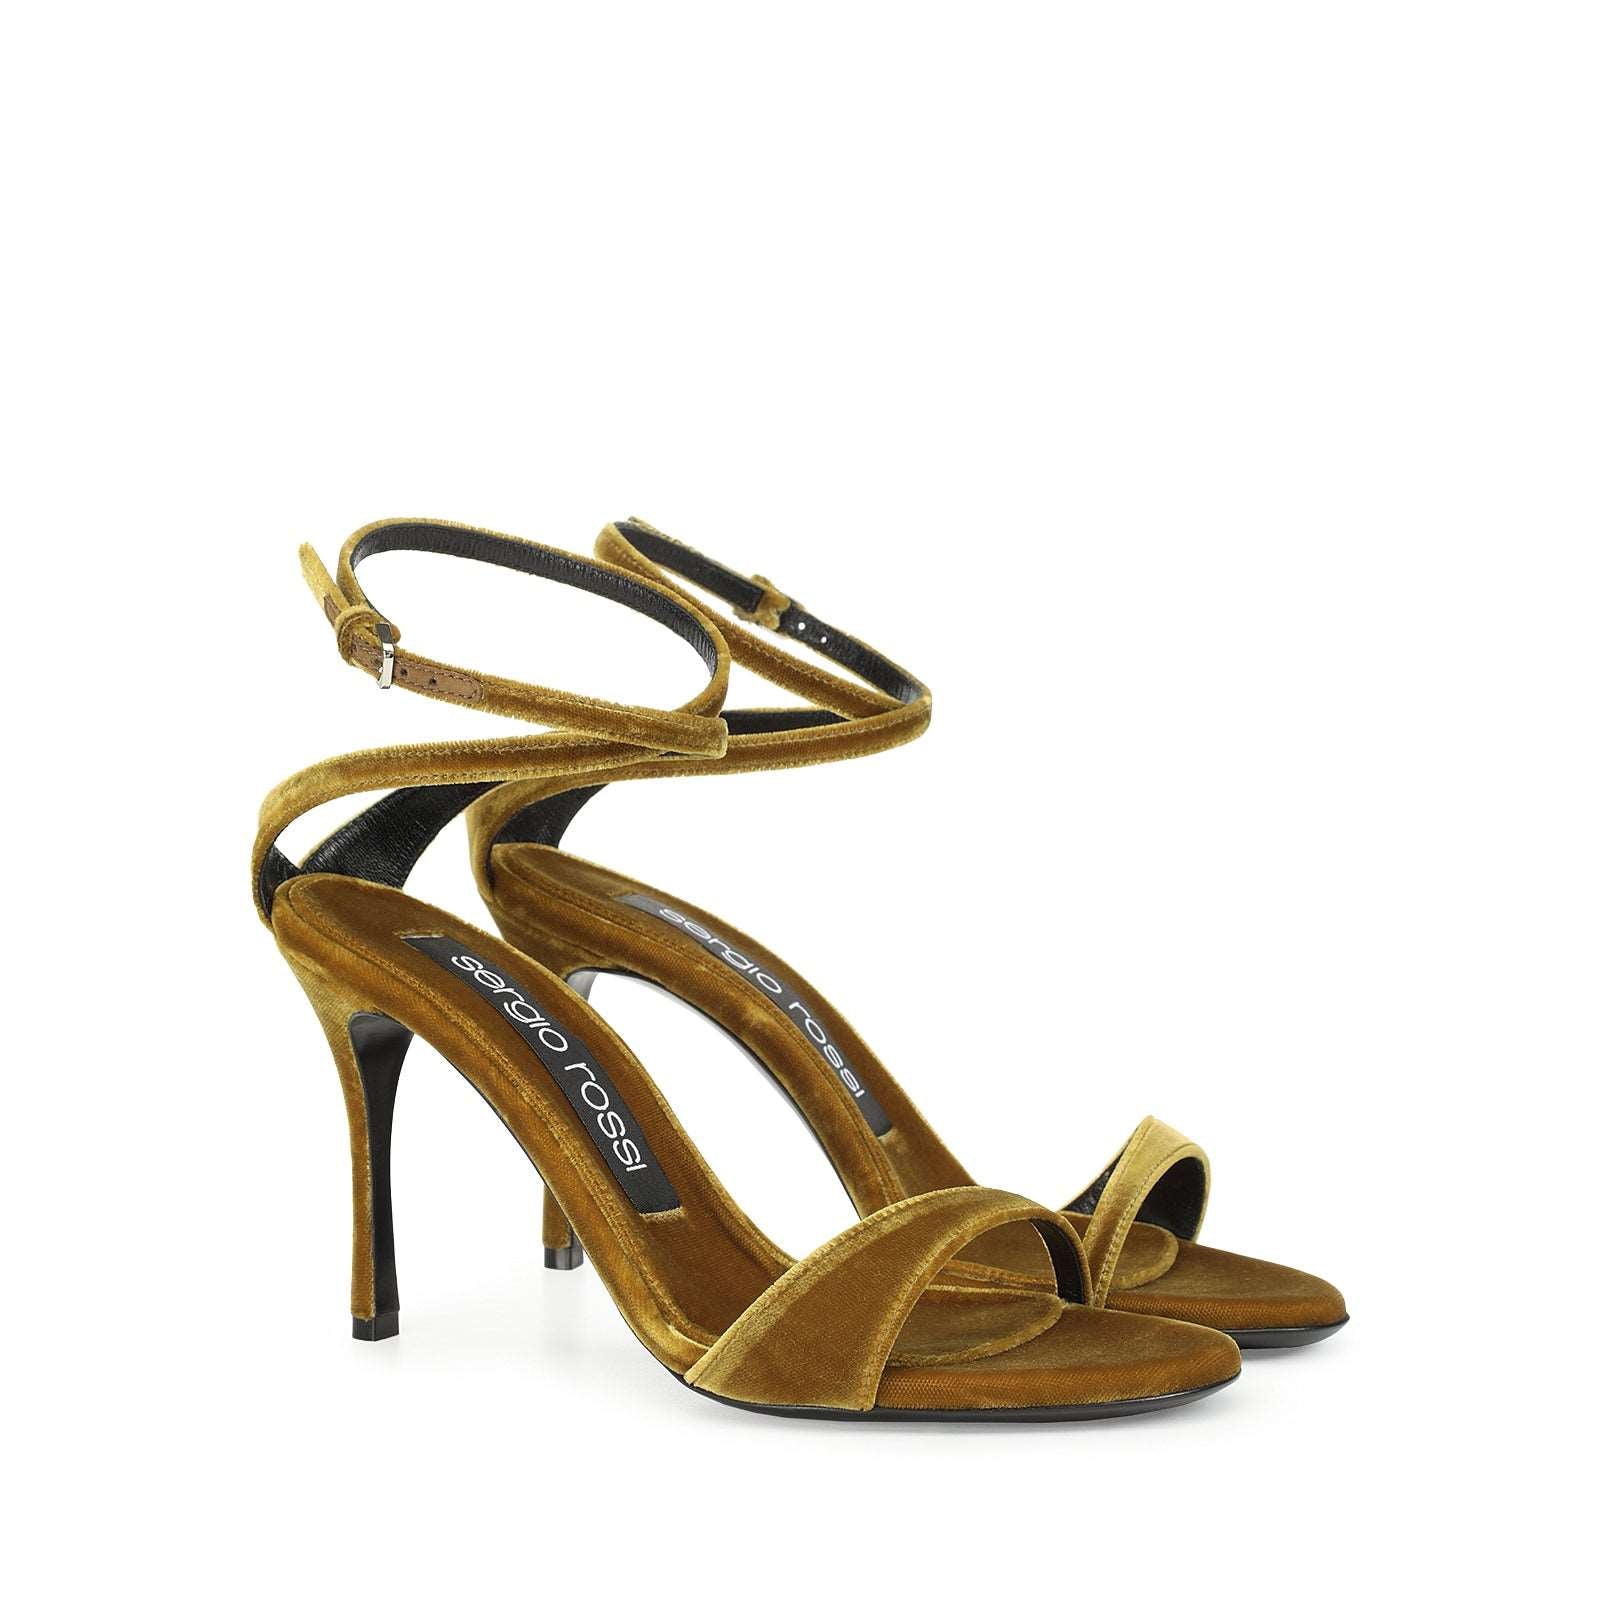 Godiva Sandal Heel|A92930Mtez16 Chartreuse